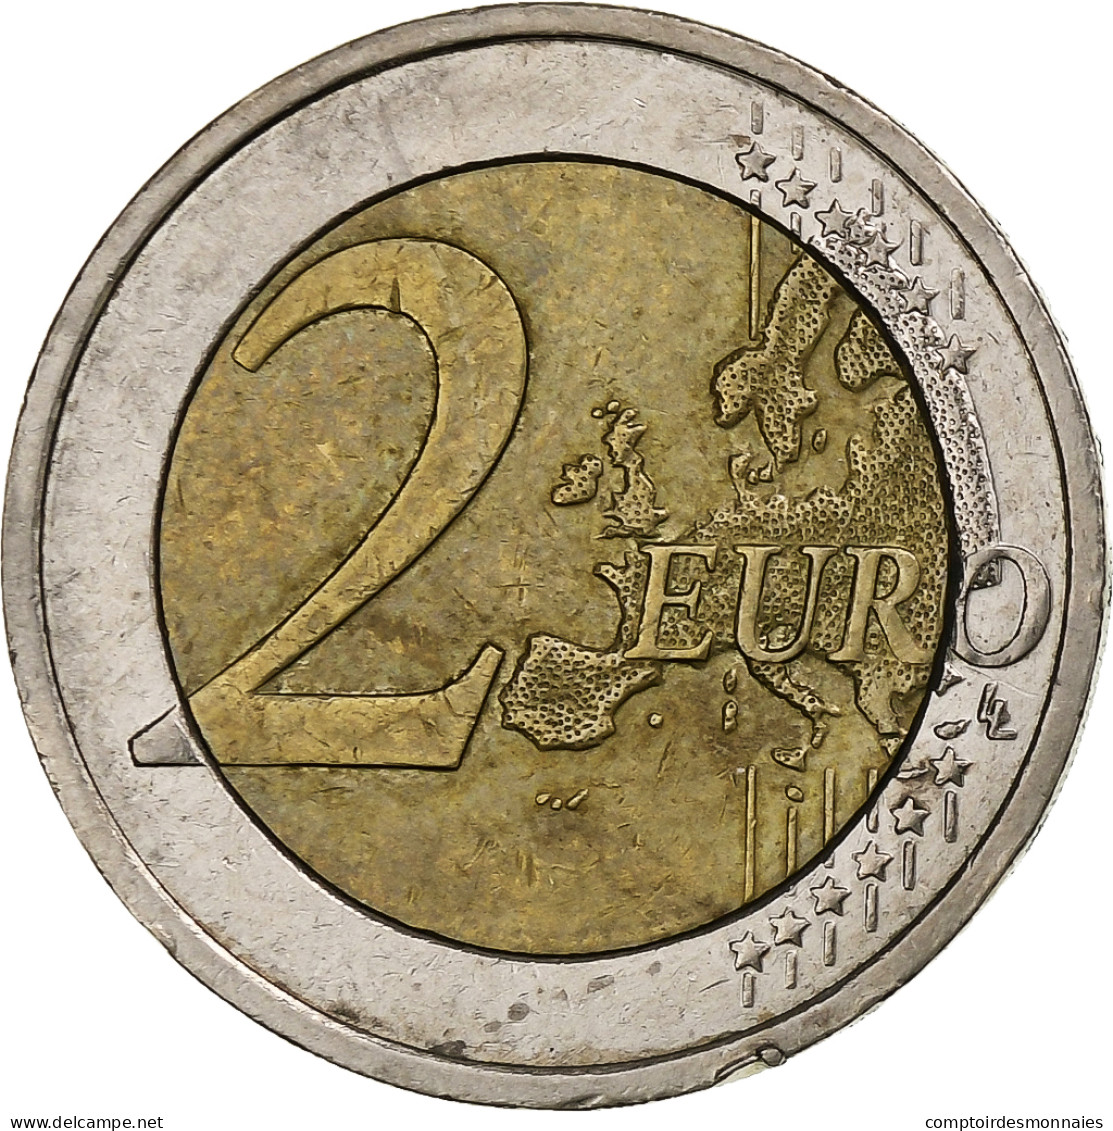 Slovaquie, 2 Euro, 2009, Kremnica, TTB, Bimétallique, KM:102 - Slovacchia